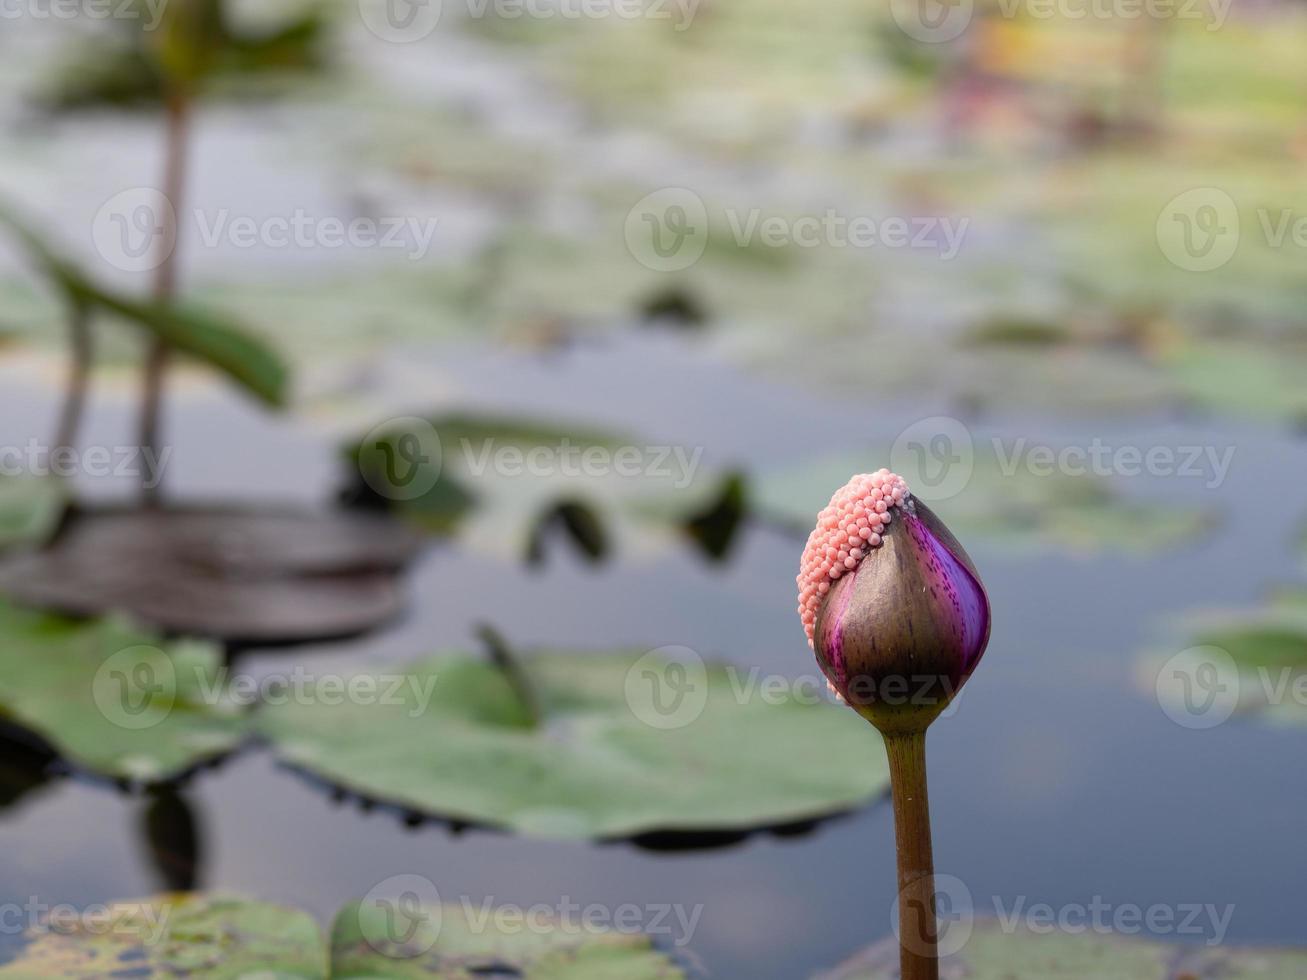 Lotus and Cherry scallop photo